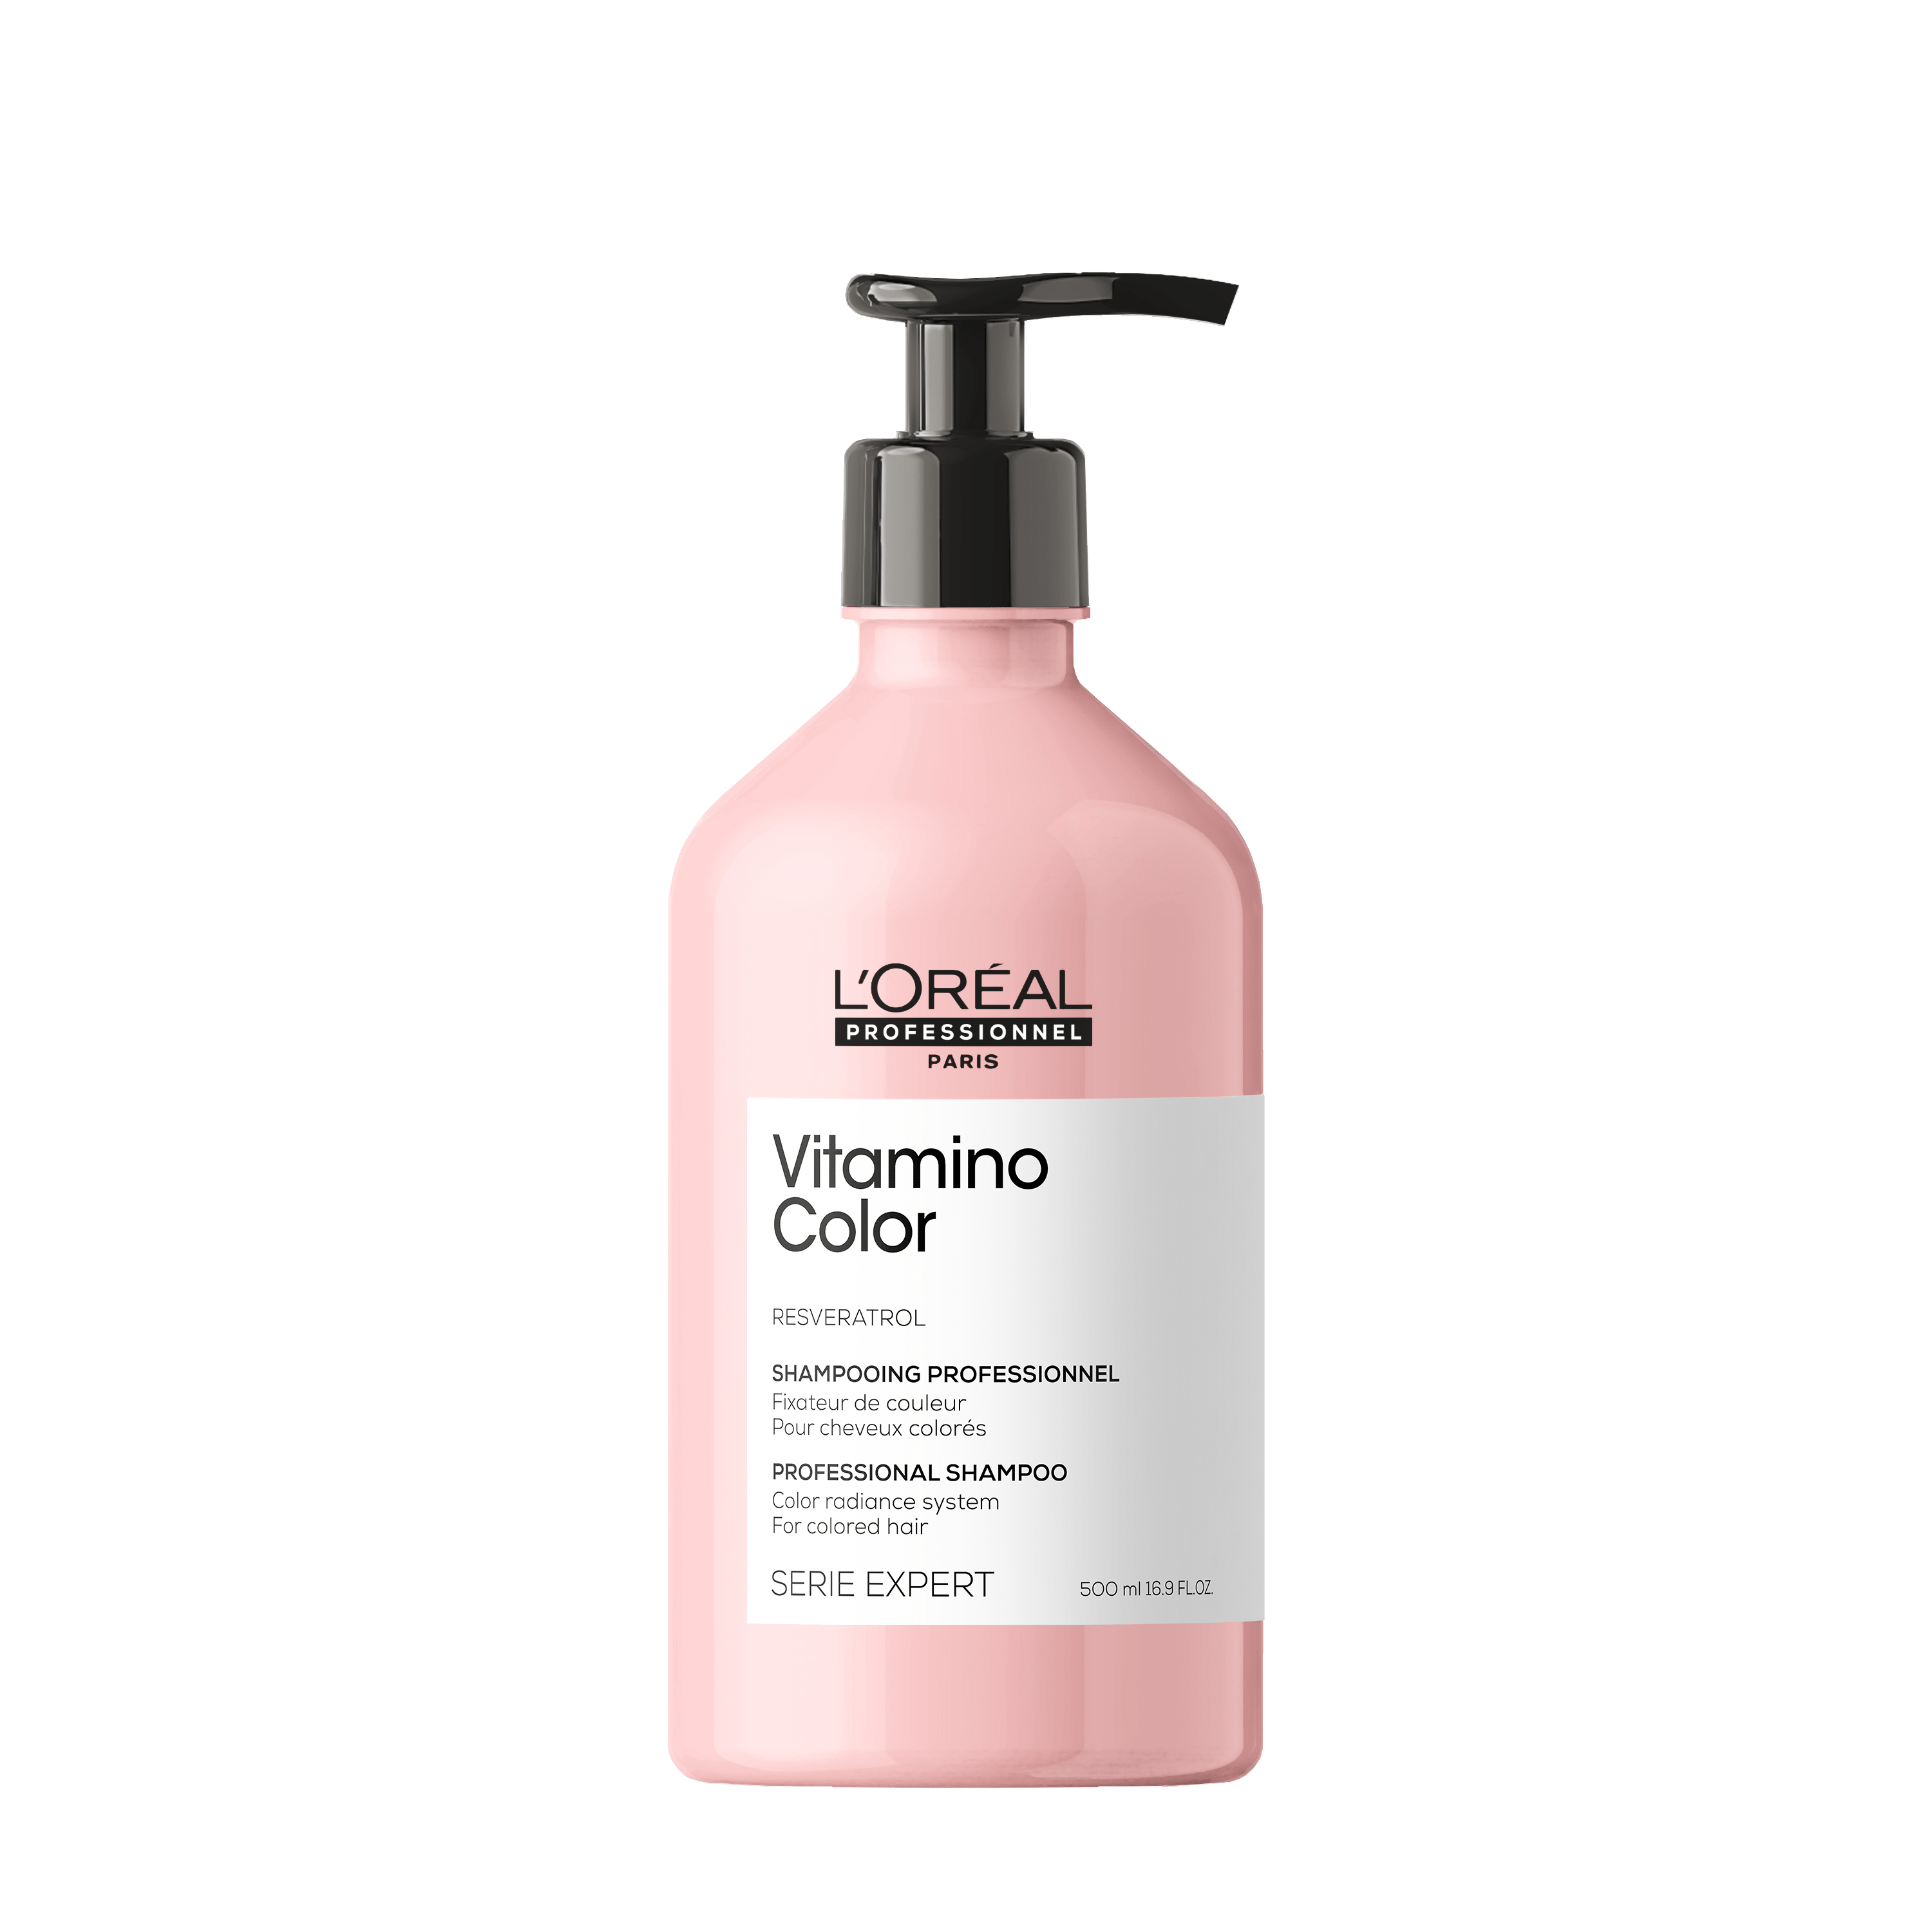 L'Oréal Professionnel Shampoo Champú Vitamino Color 500ml Roberta Beauty Club